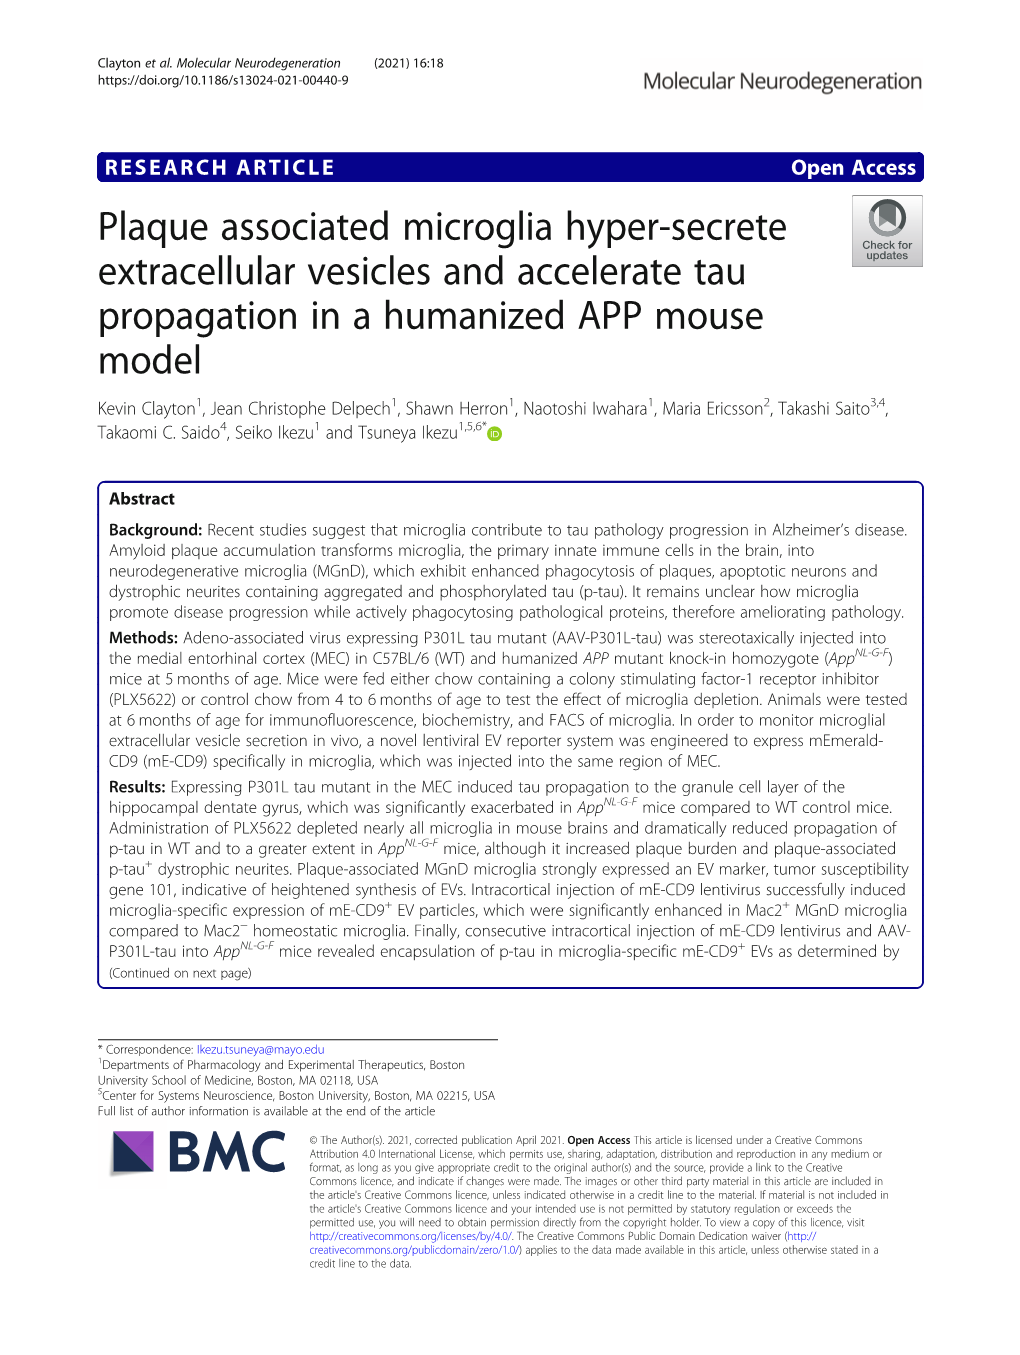 Plaque Associated Microglia Hyper-Secrete Extracellular Vesicles